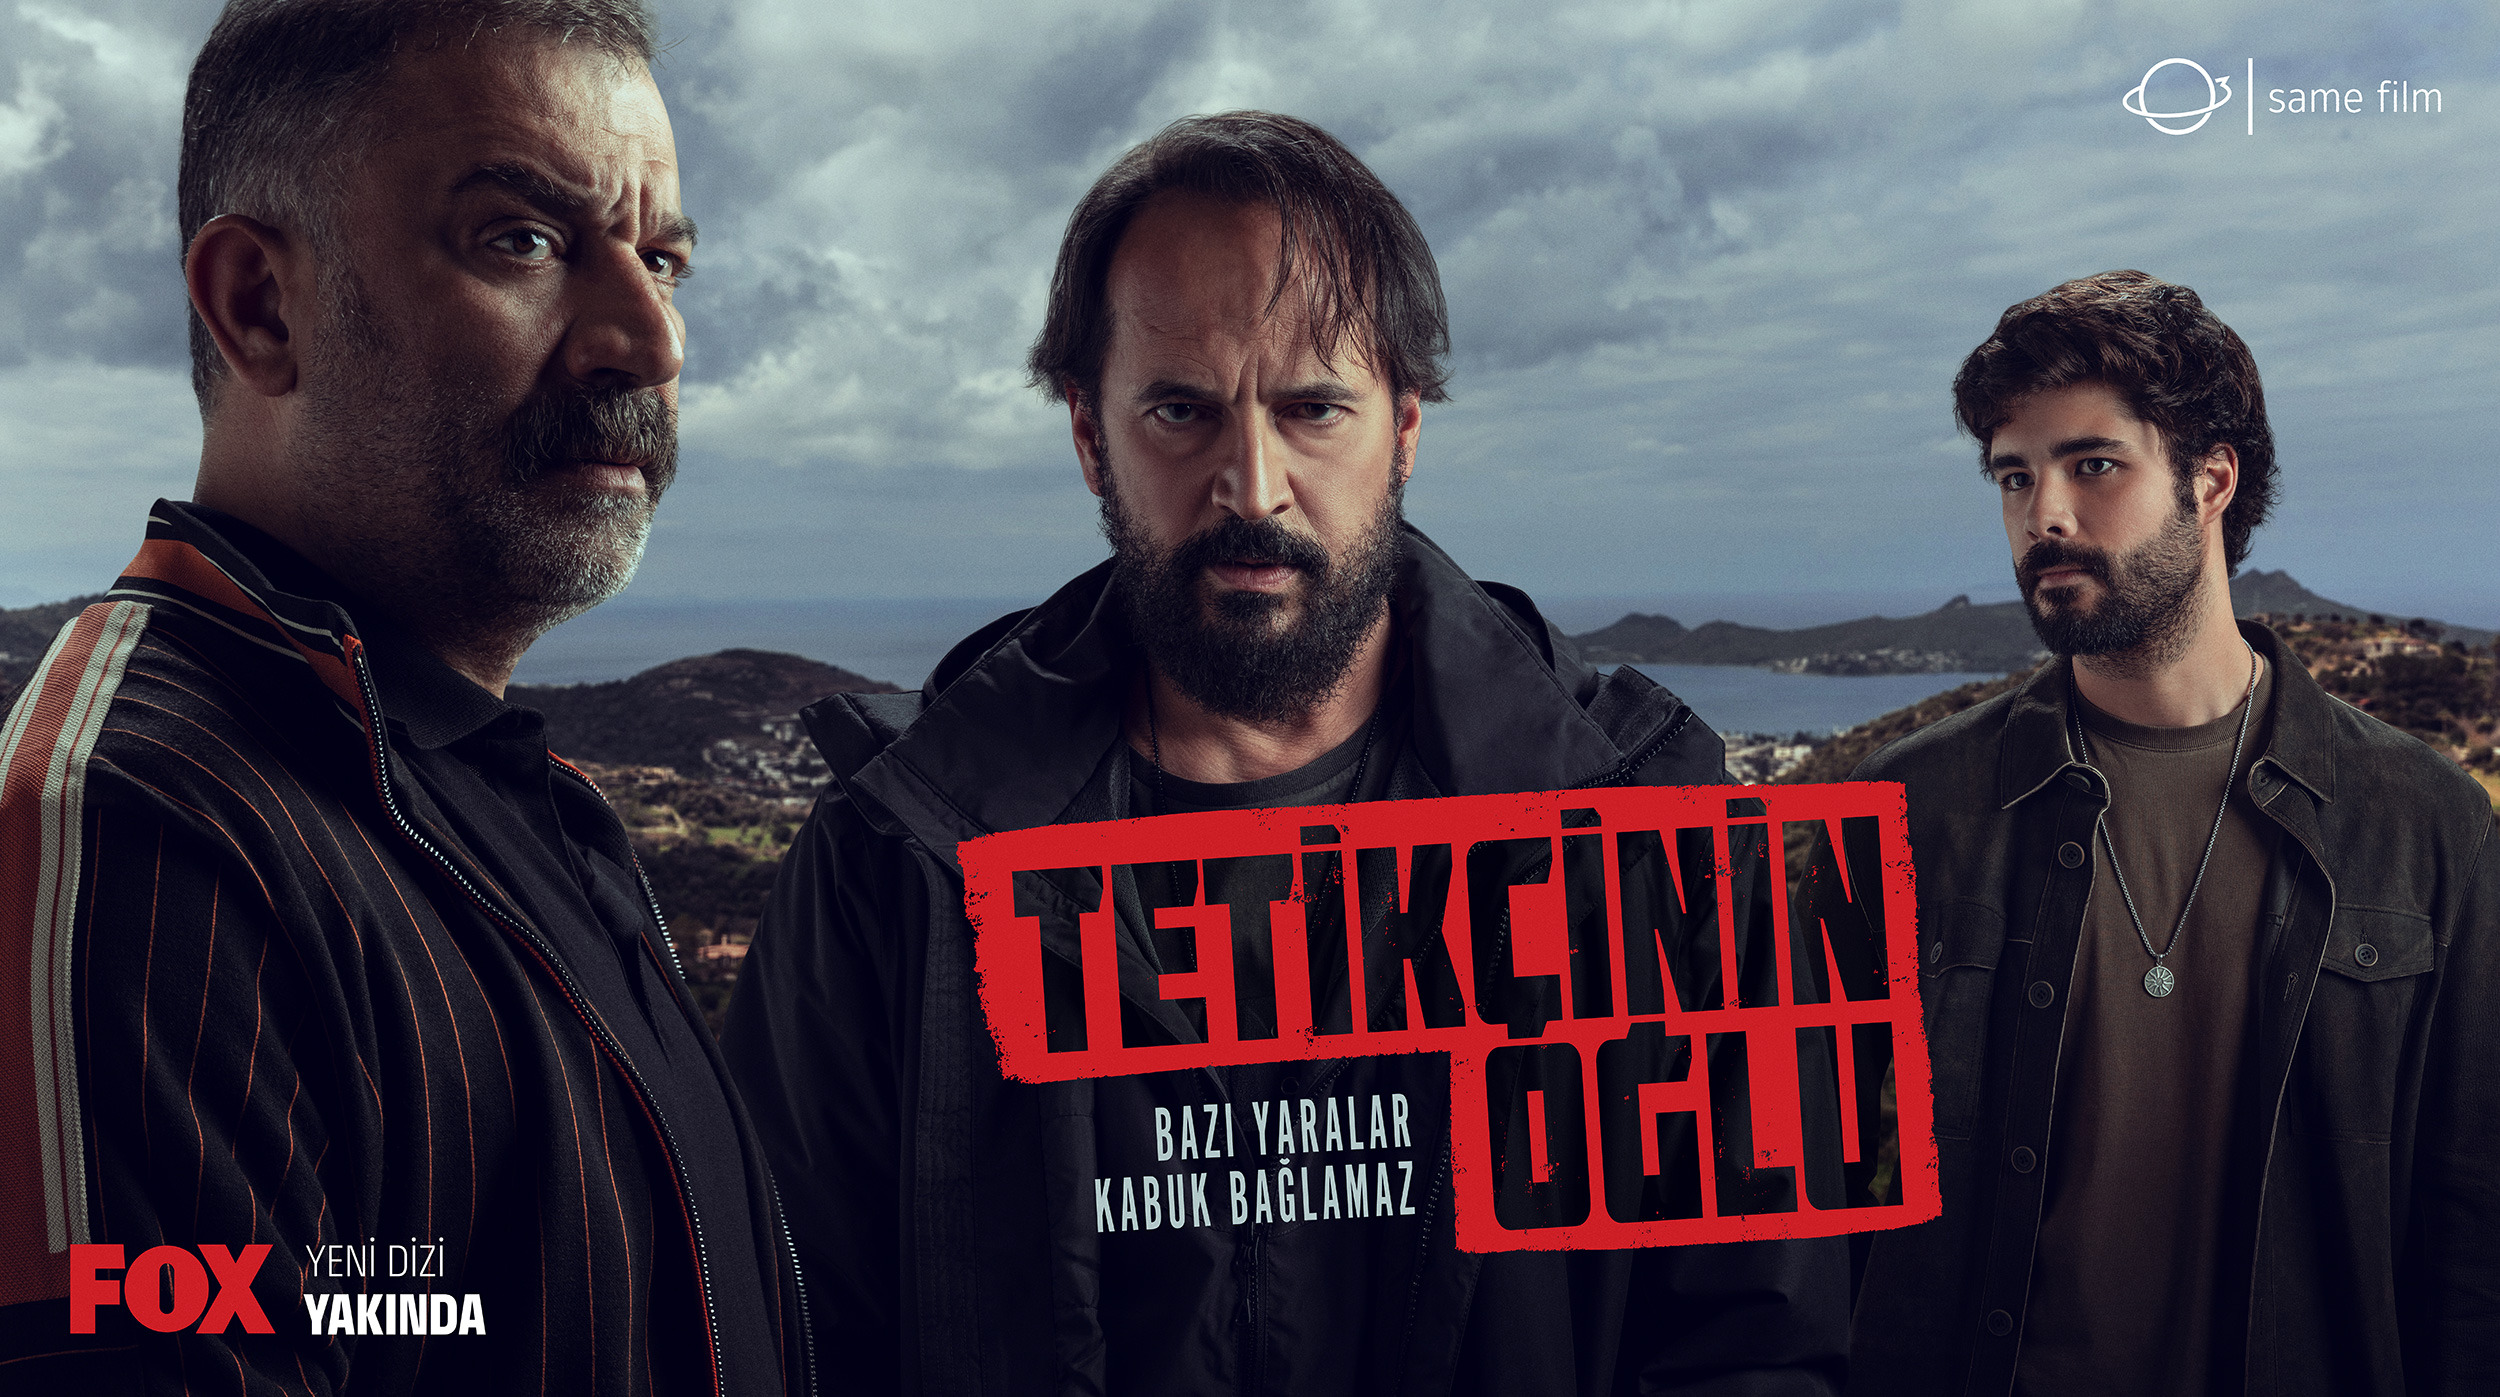 Mega Sized TV Poster Image for Tetikçinin Oglu (#2 of 2)